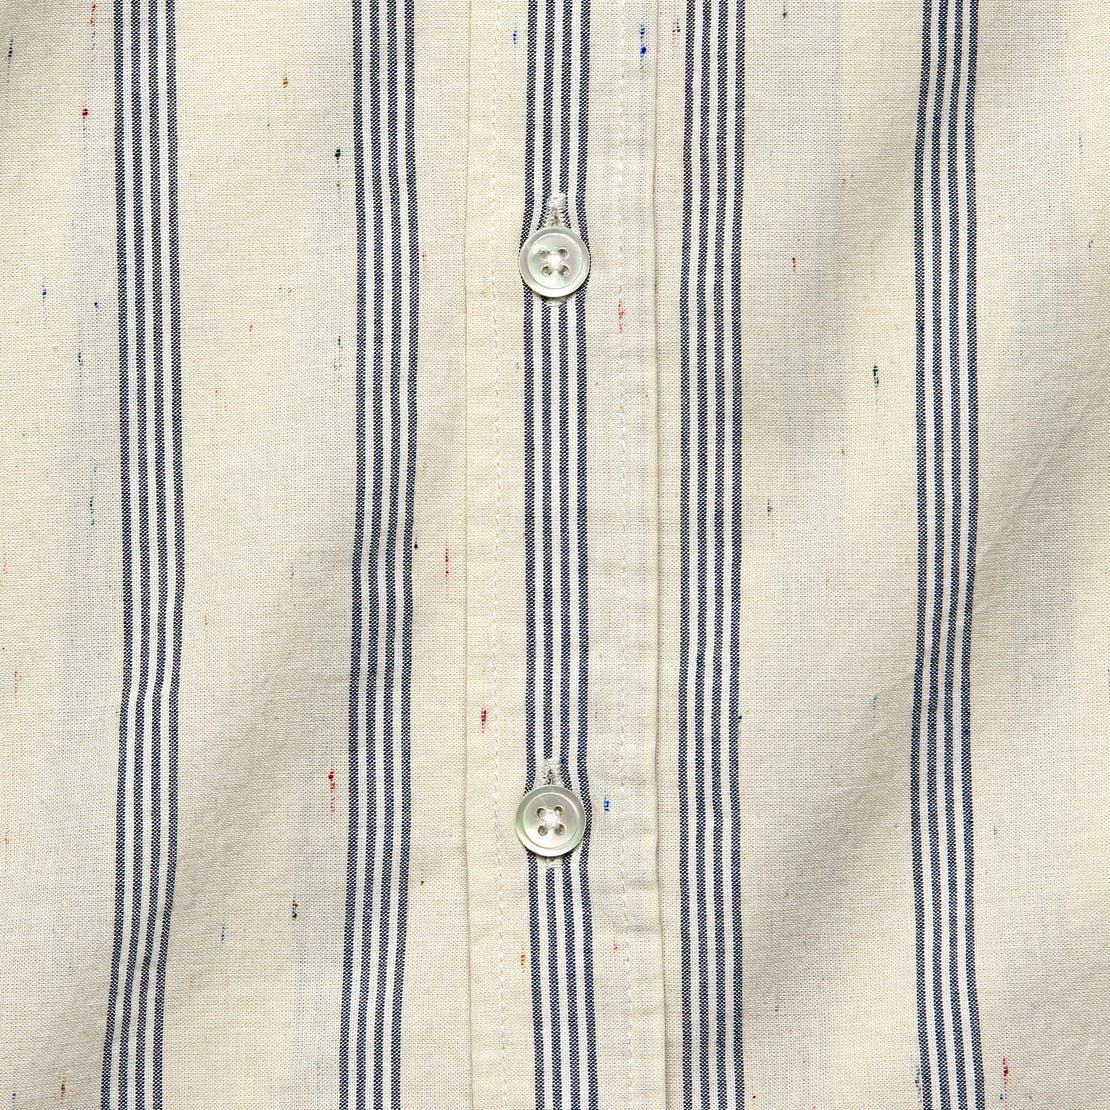 Ebano Stripe Shirt - White/Blue - Portuguese Flannel - STAG Provisions - Tops - S/S Woven - Stripe